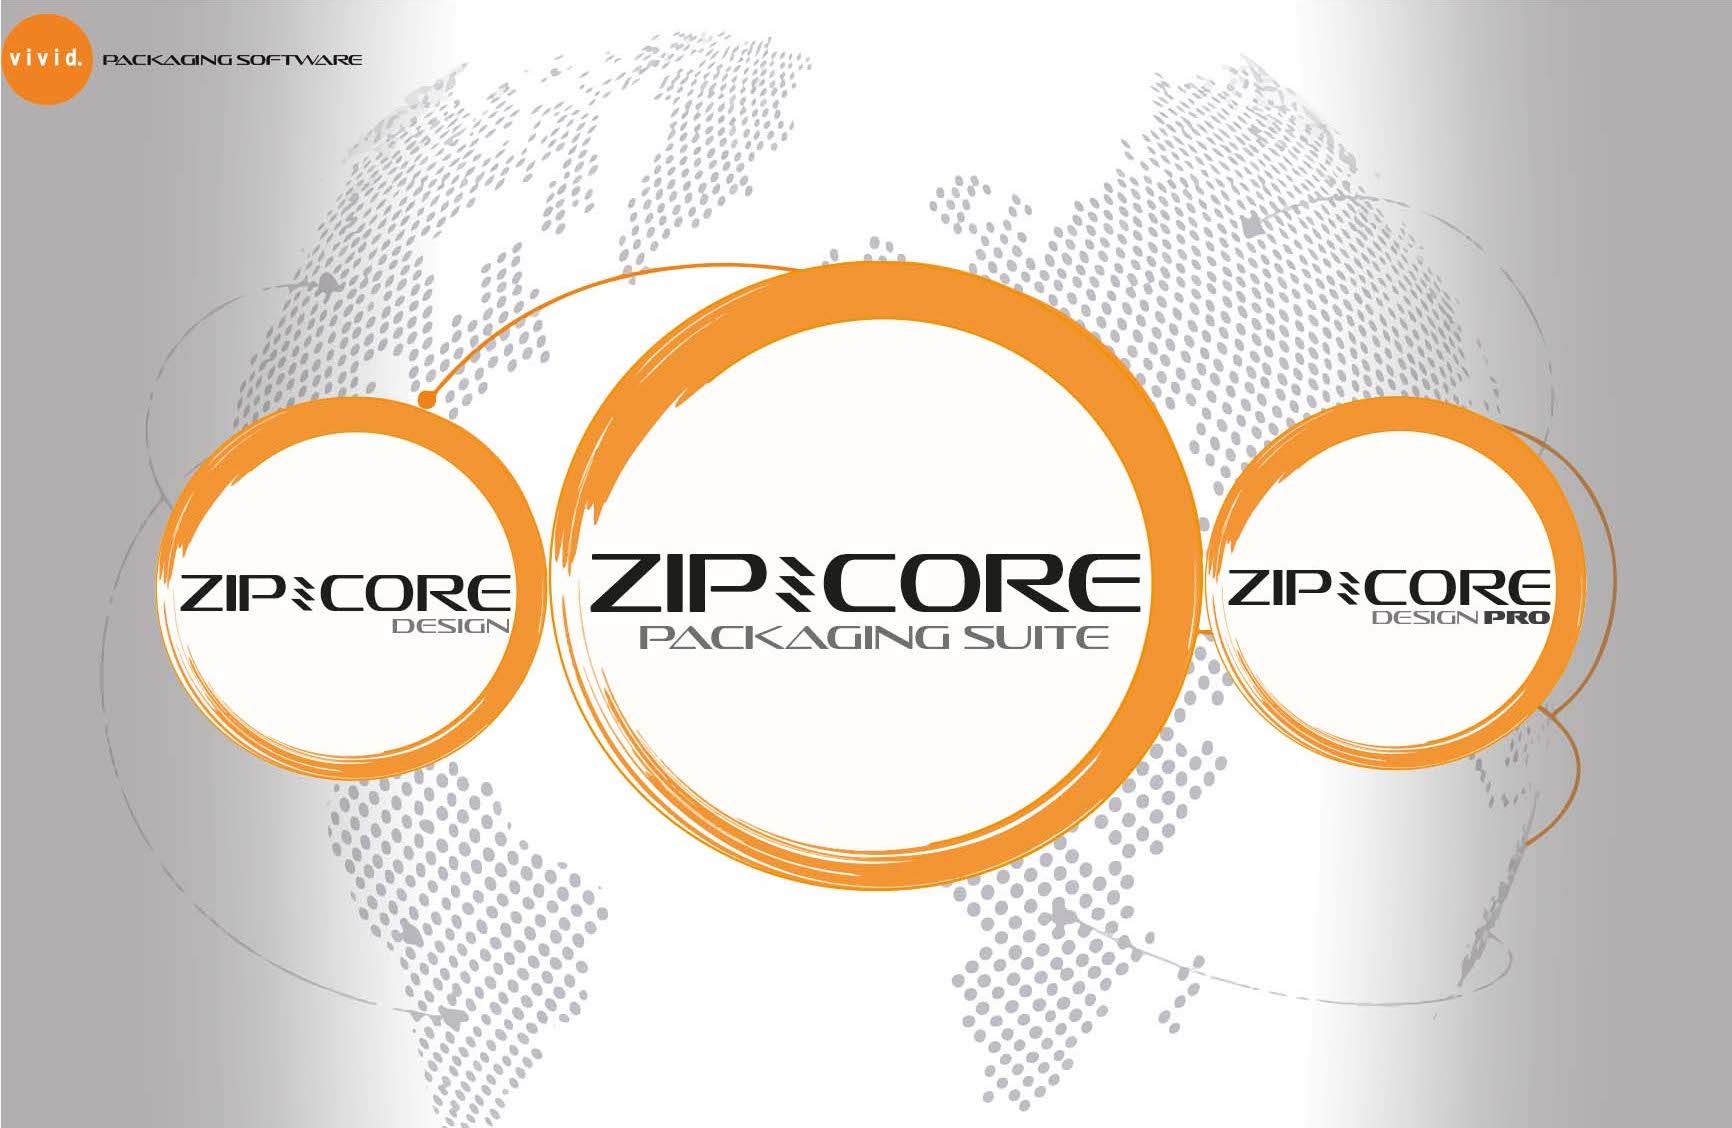 Introducing Zip Core Packaging Software